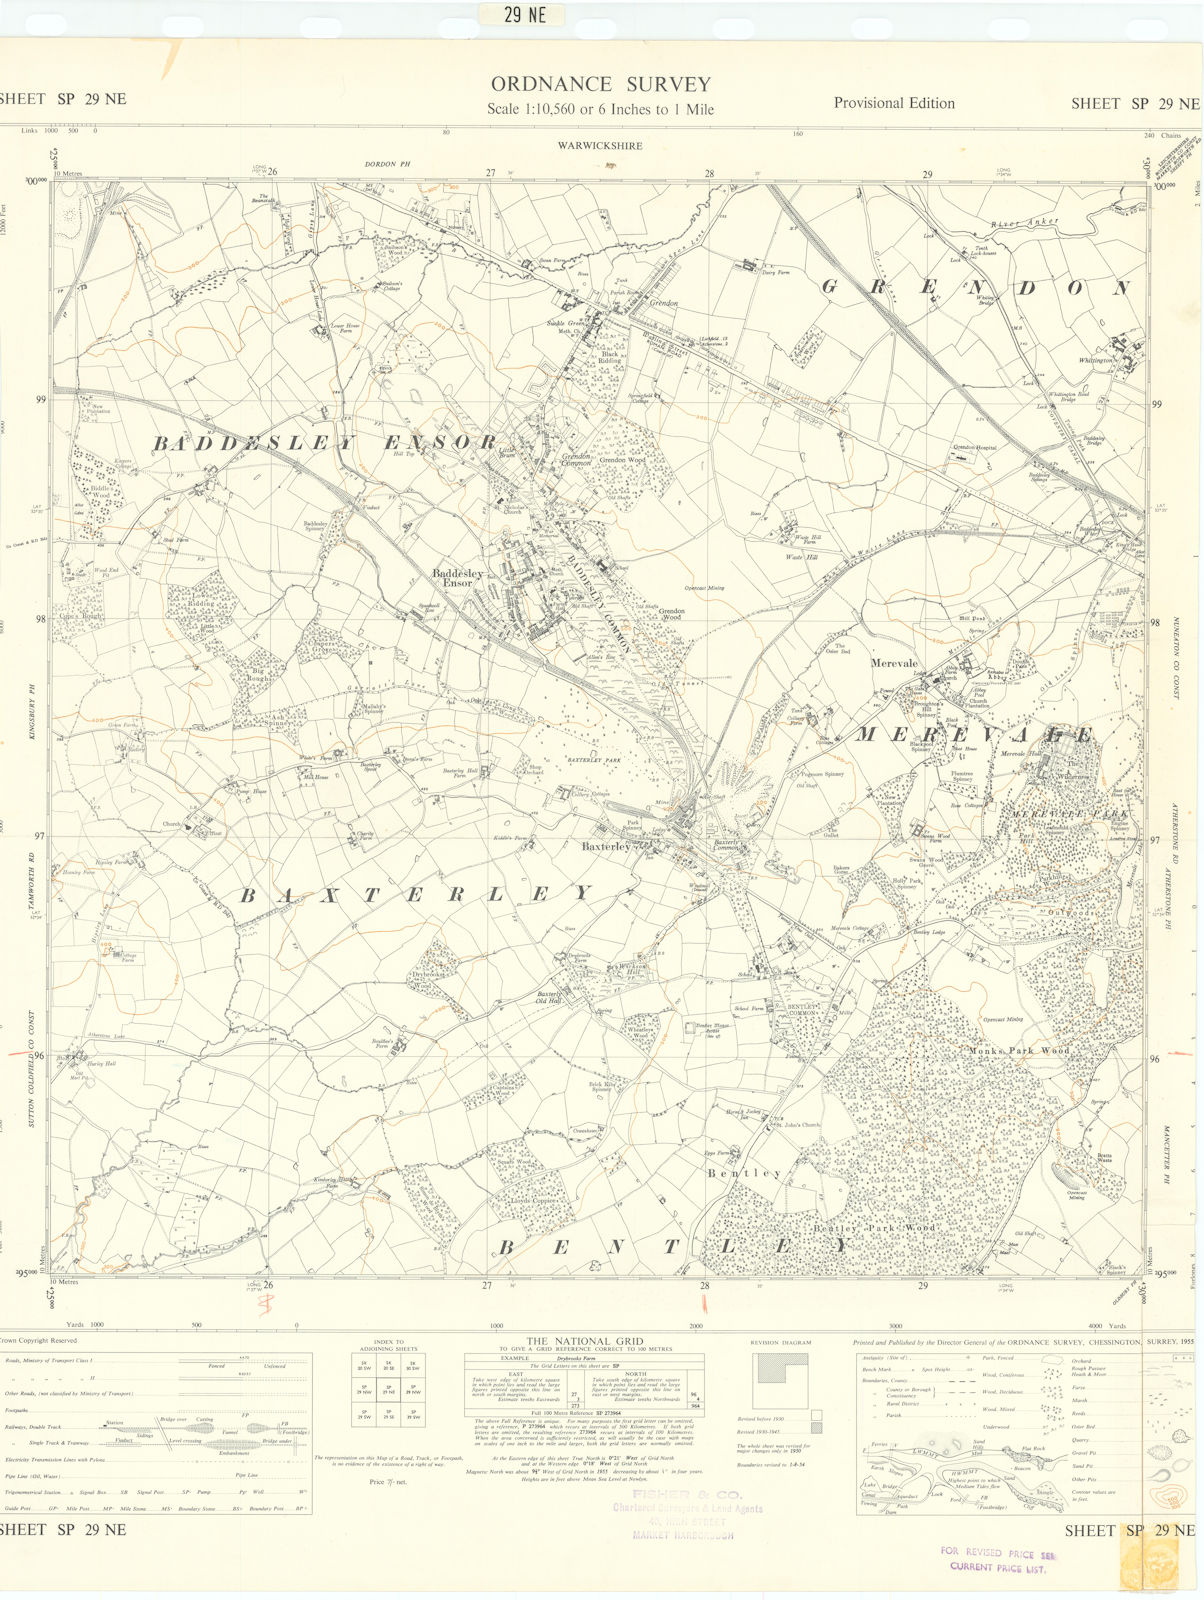 Ordnance Survey SP29NE Warwickshire Baddesley Ensor Baxterley Merevale  1955 map